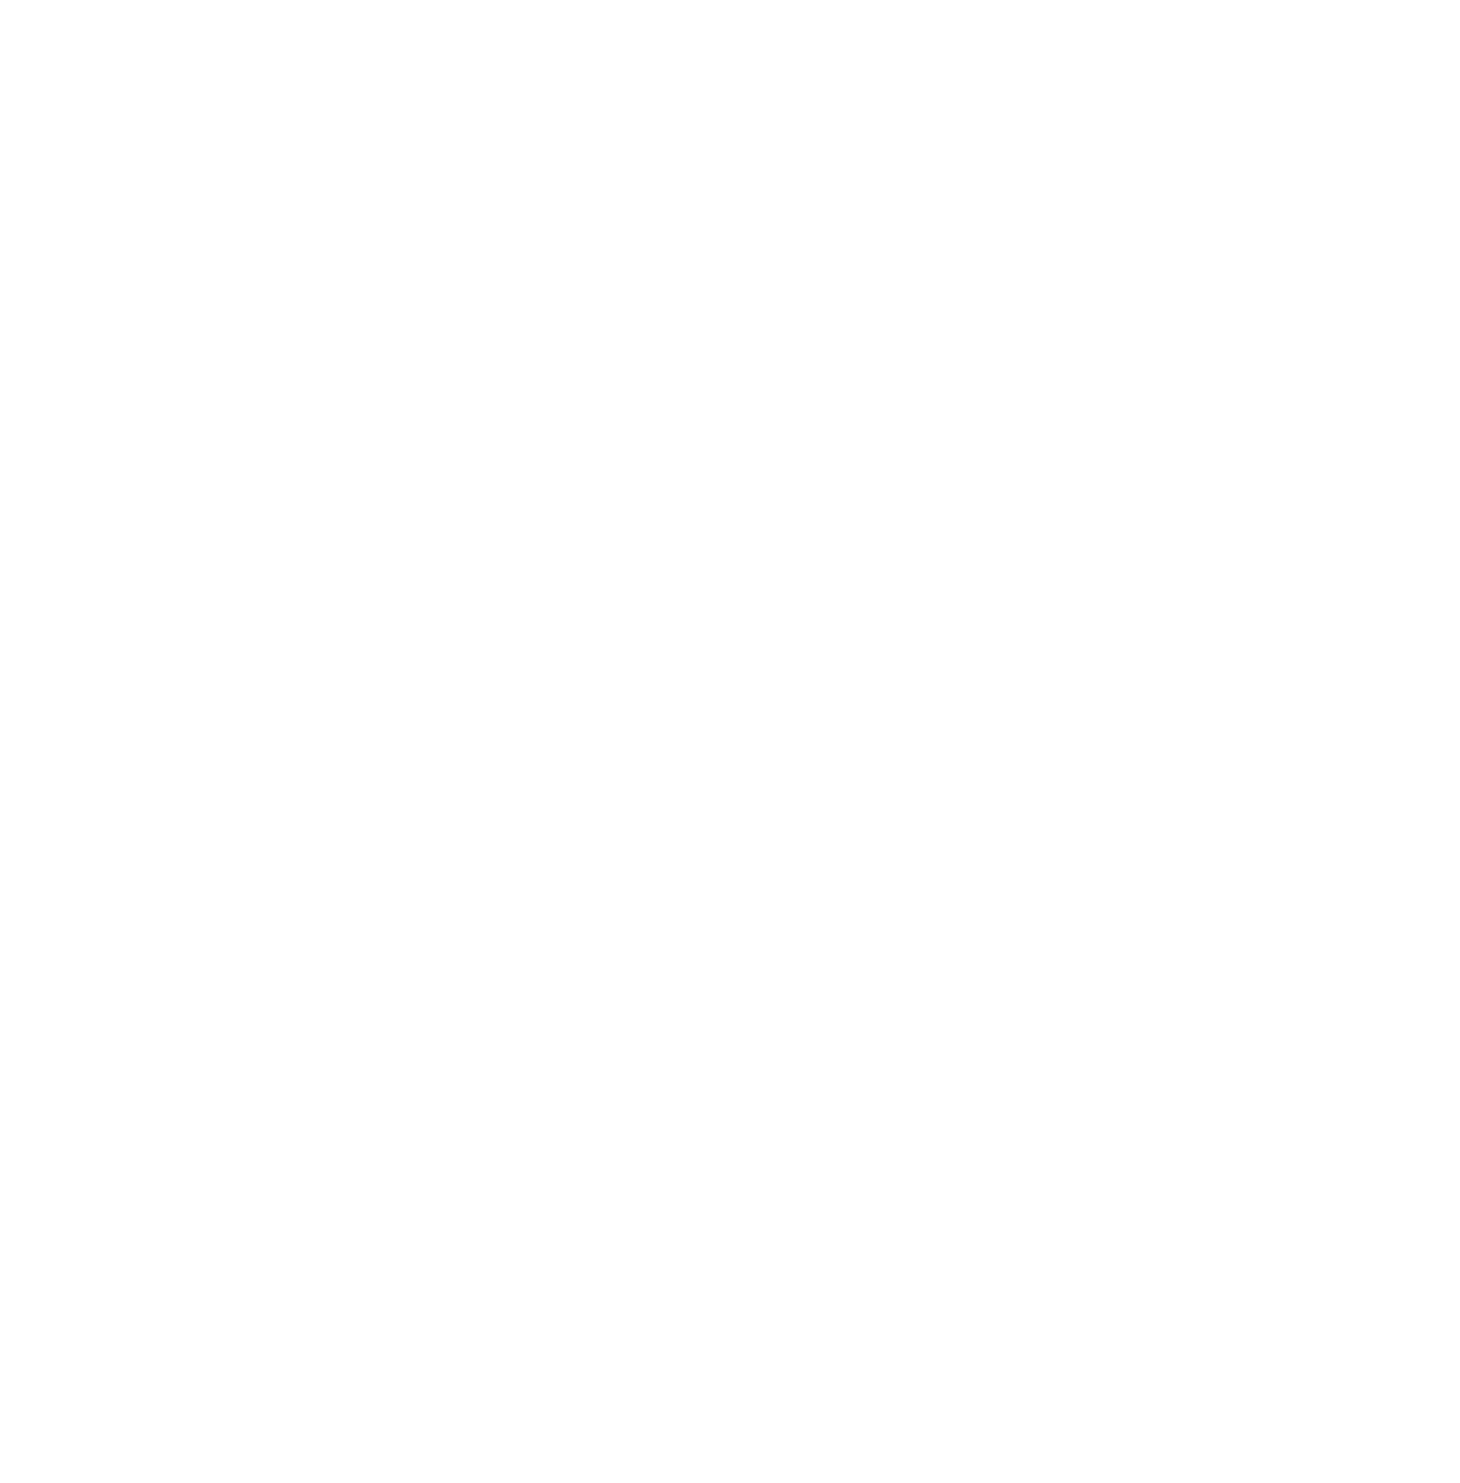 Revive Logo